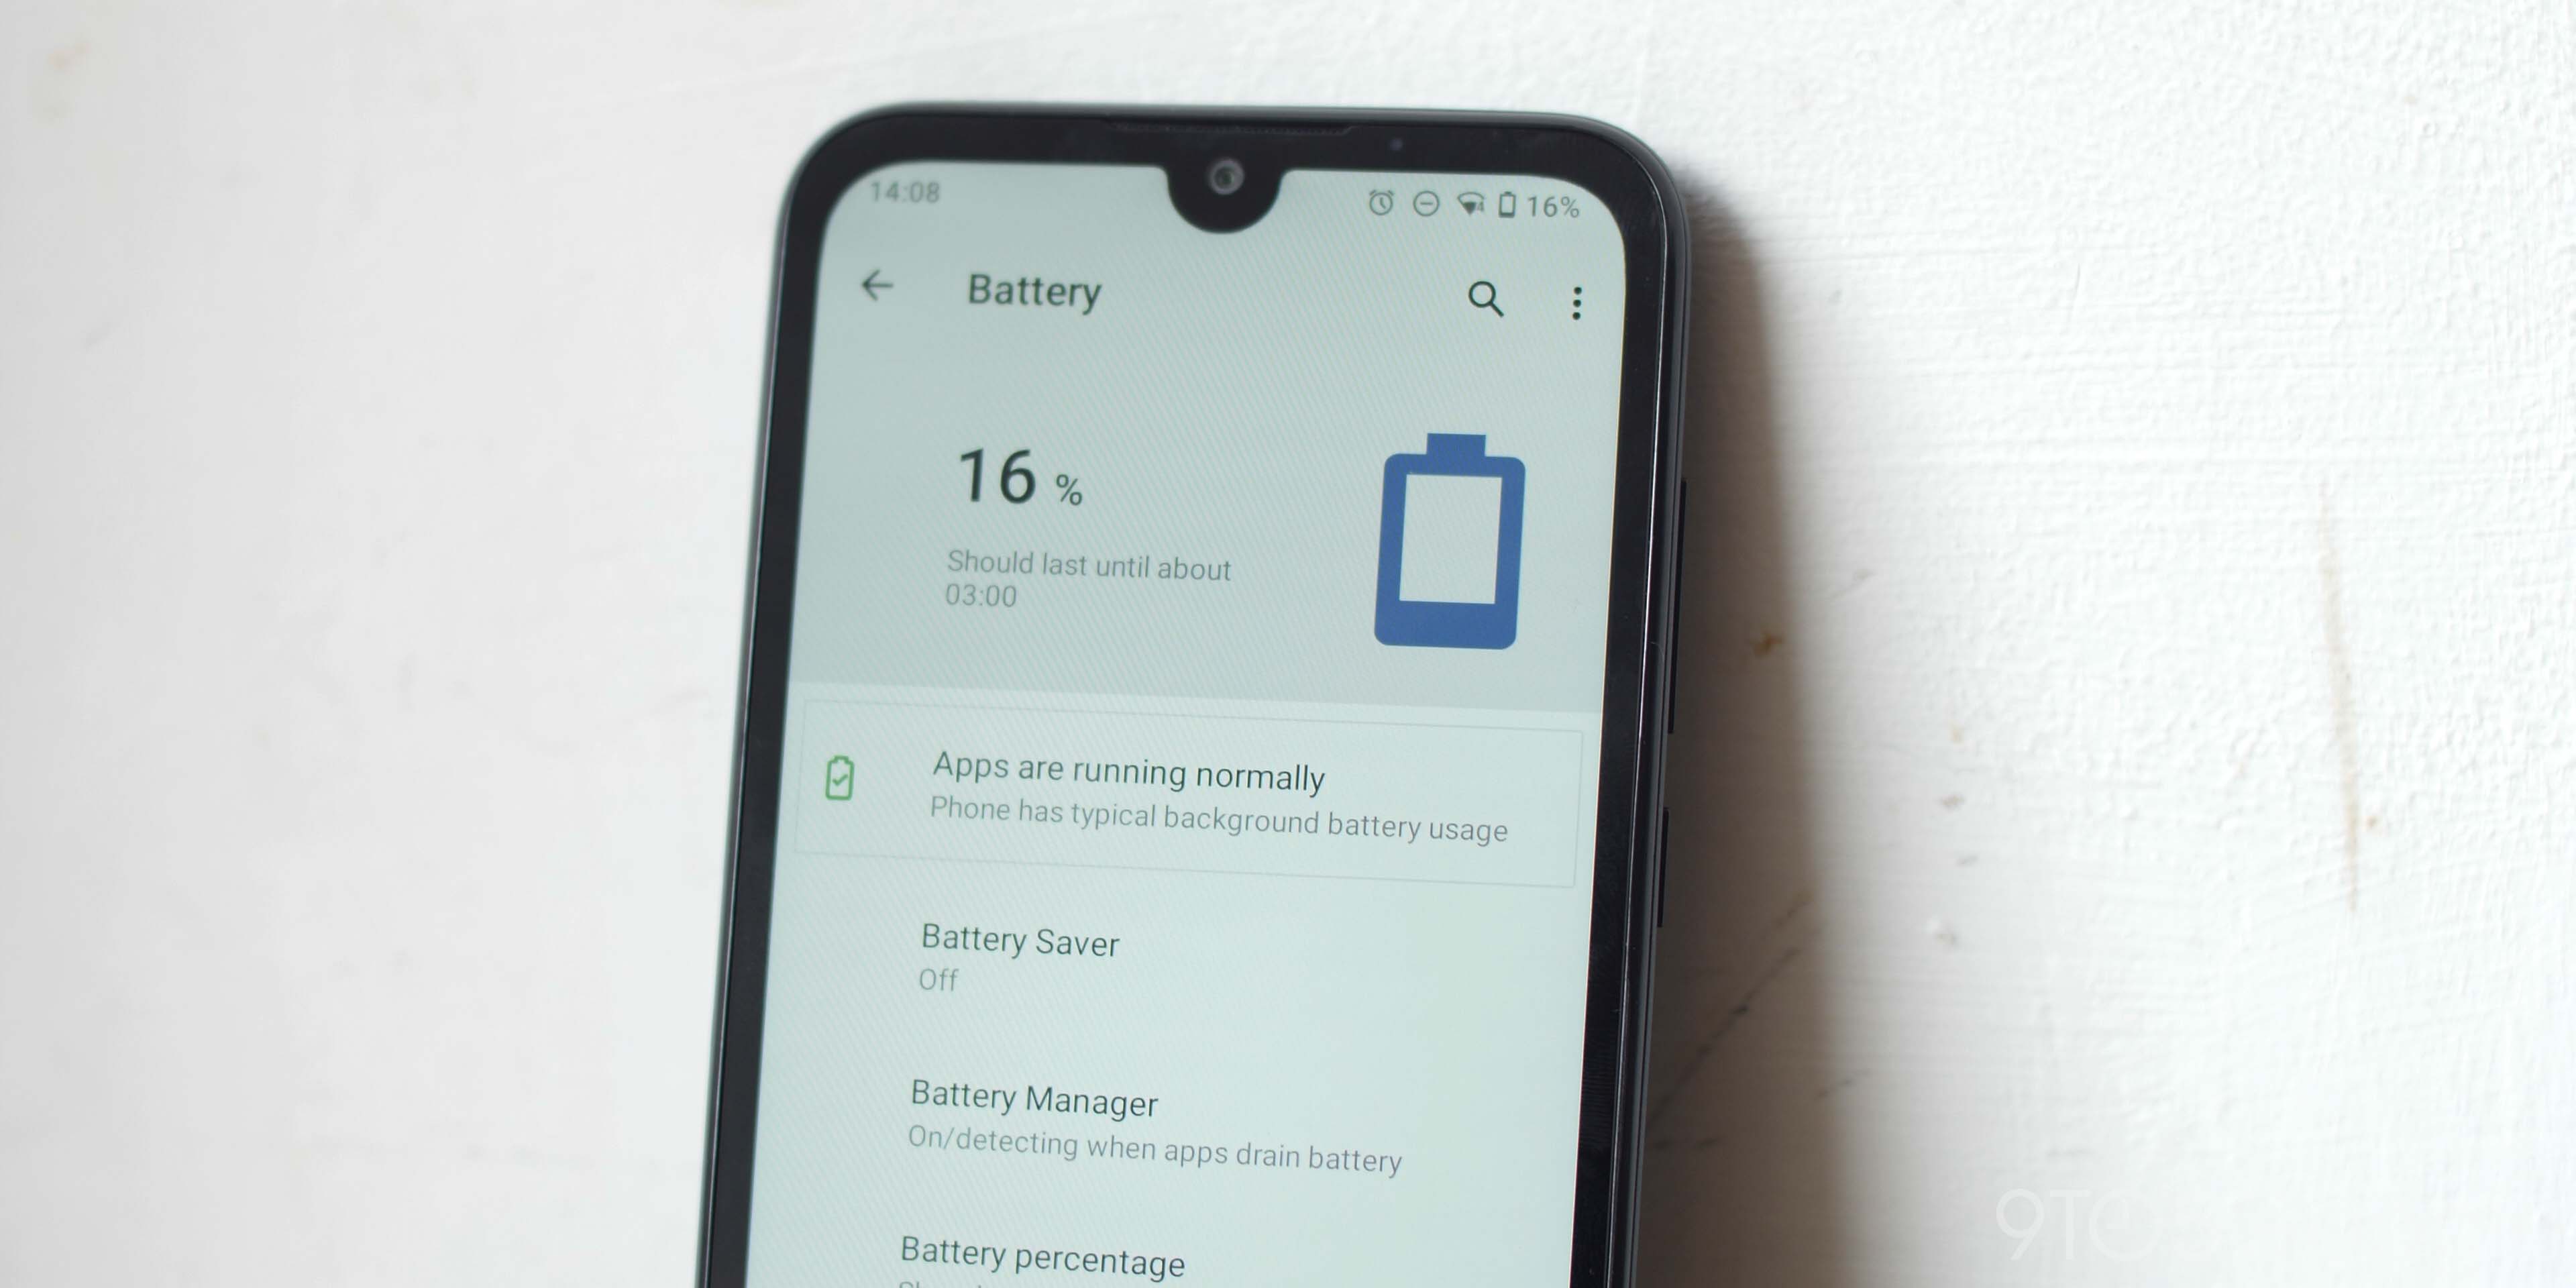 Nokia 1.3 battery